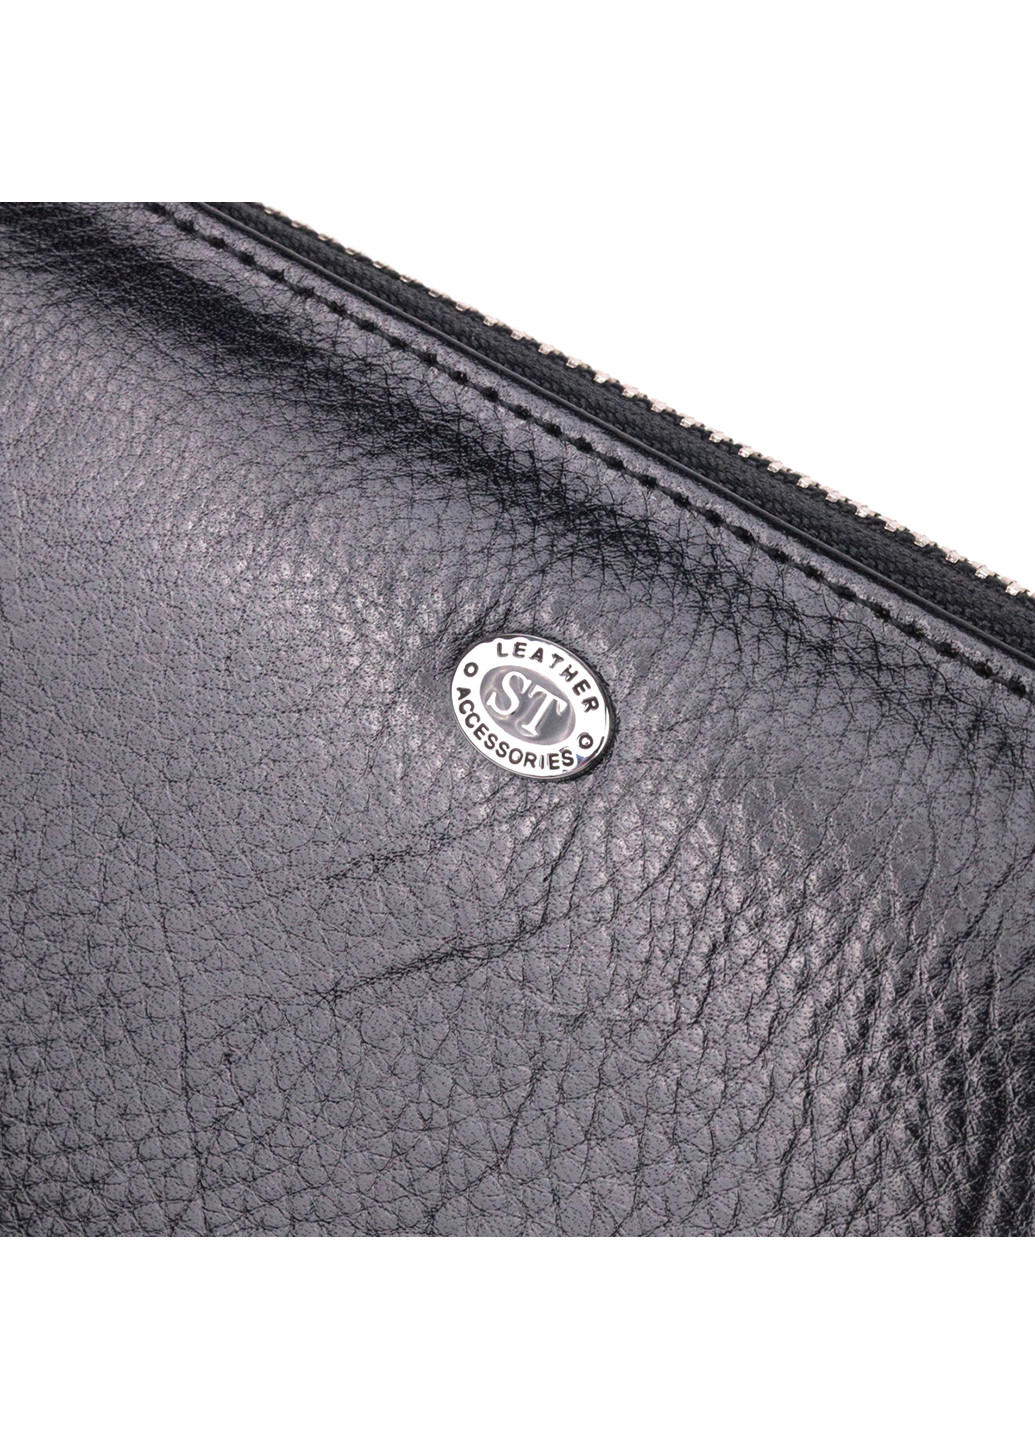 Мужской кожаный кошелек 19х10х2 см st leather (257065381)